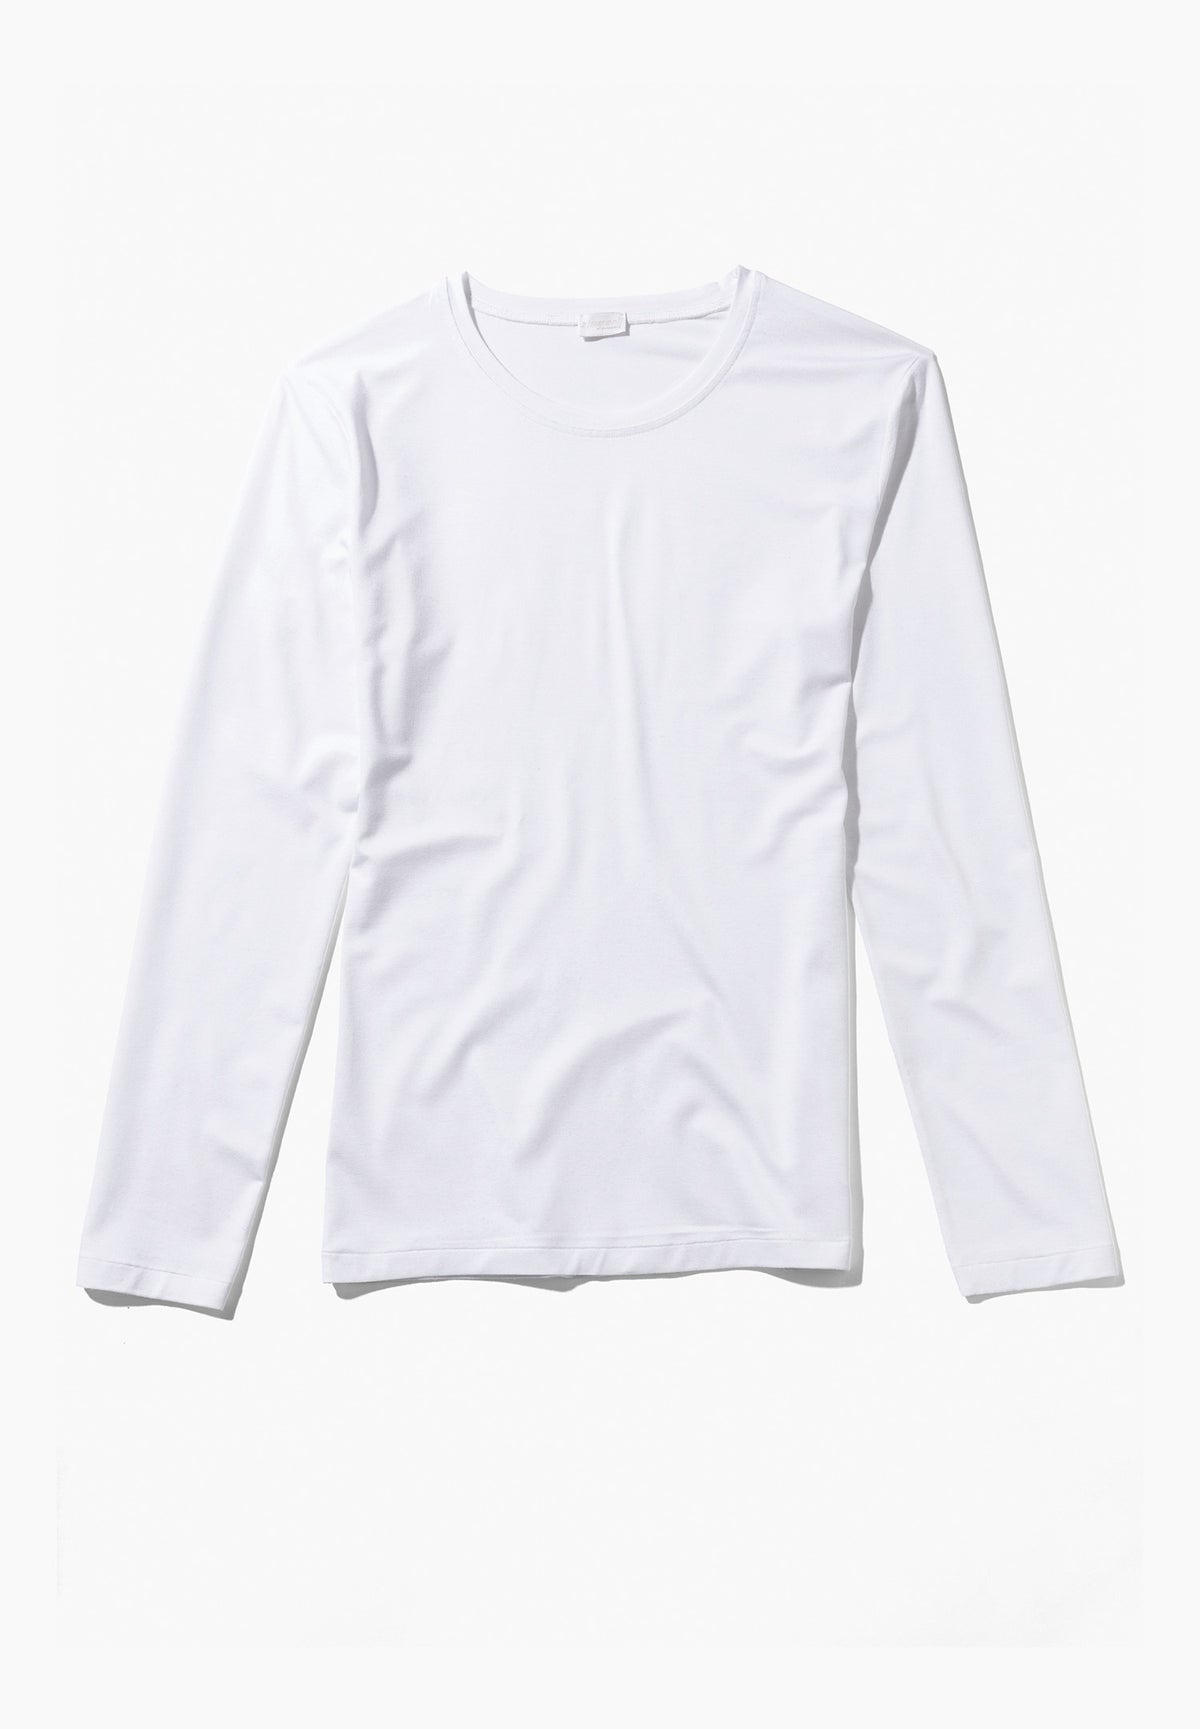 Pureness | T-Shirt Long Sleeve - white